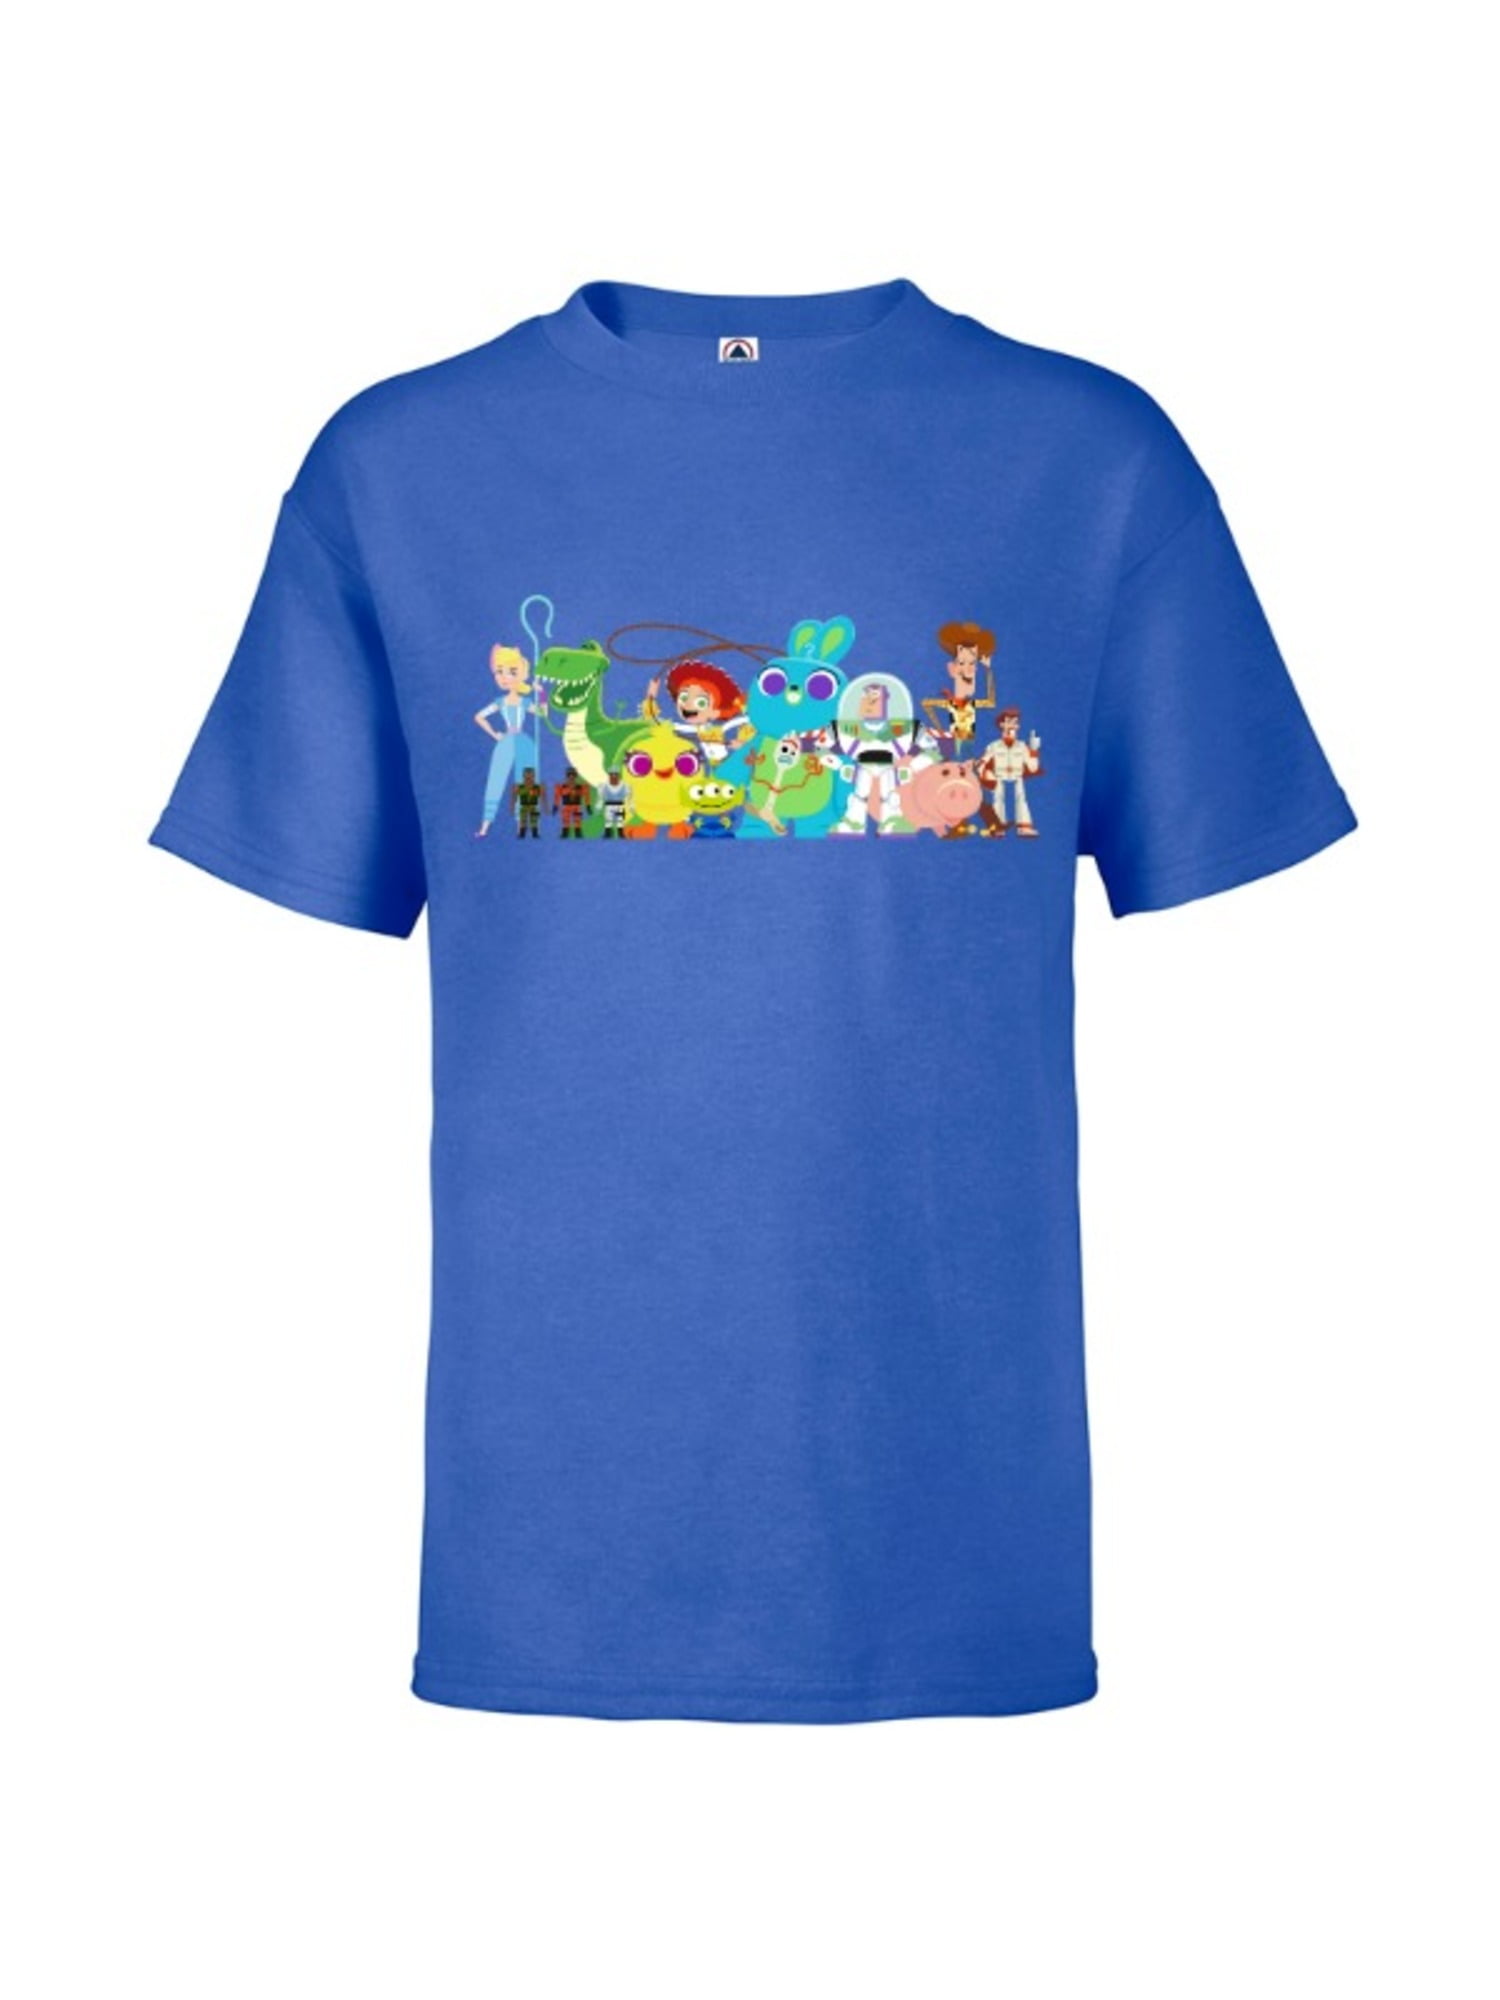 Disney Toy Story Duke Caboom Kids Girls Boys Youth Video Movie Cartoon T-Shirt 